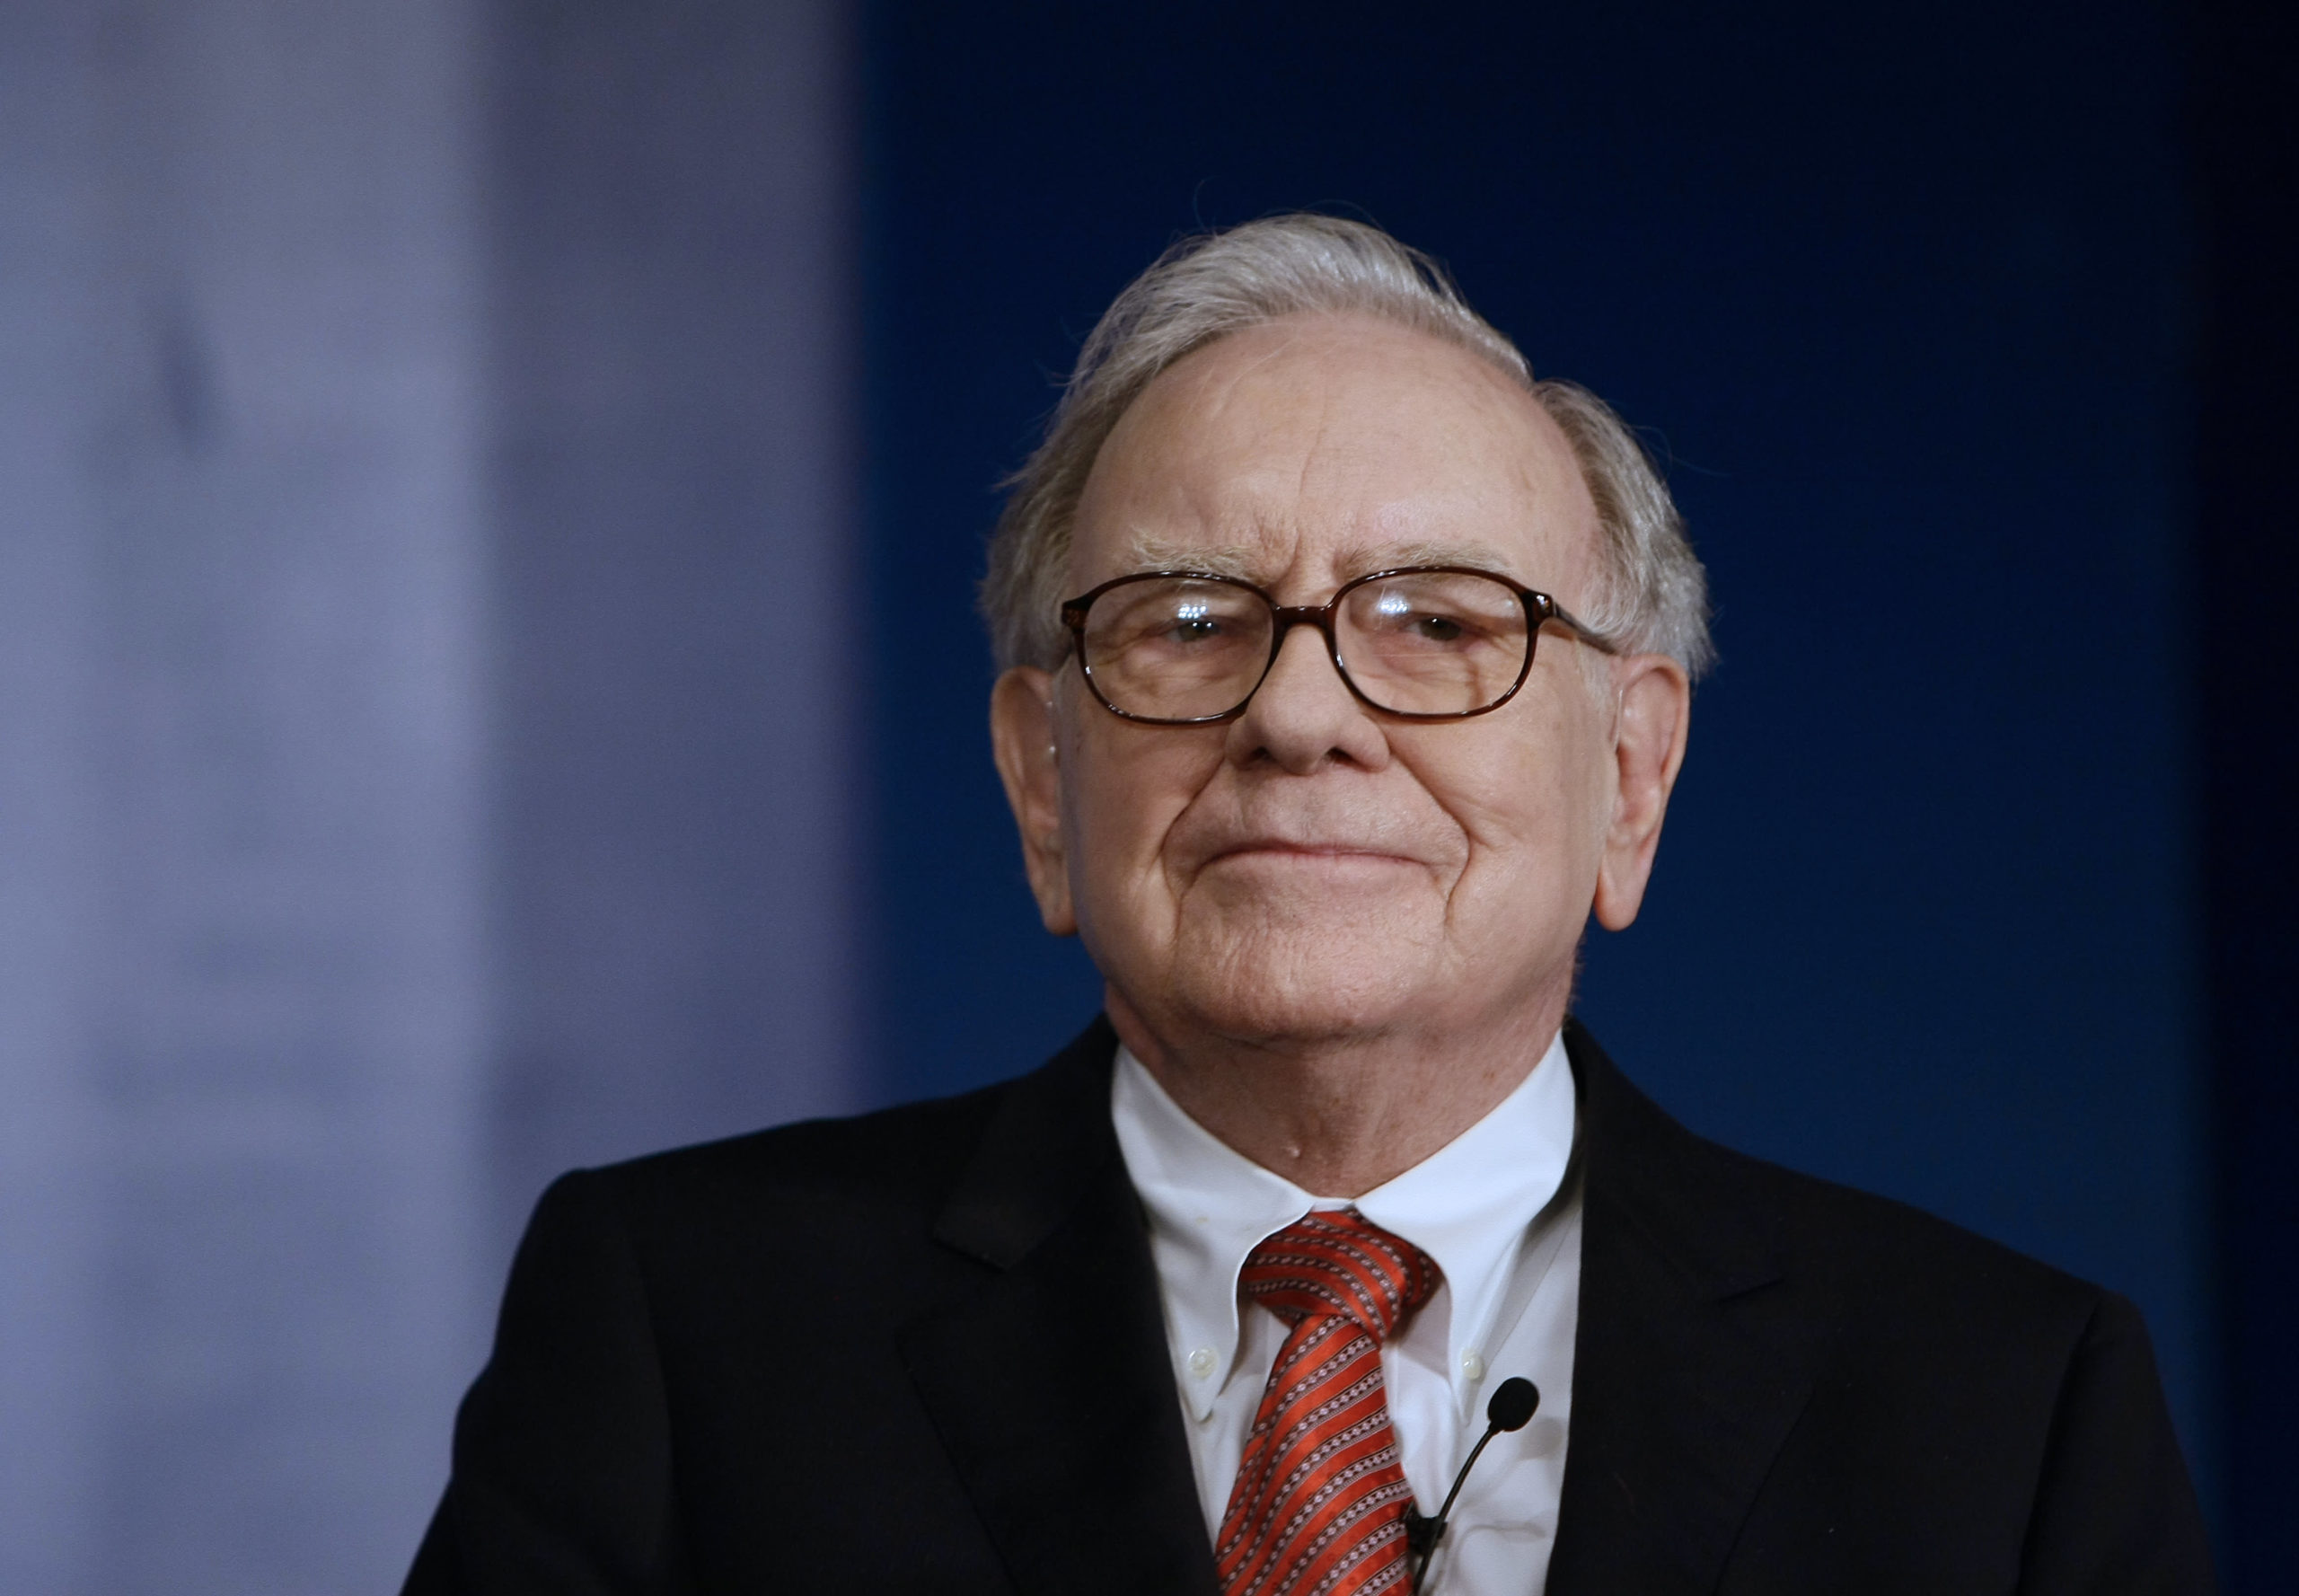 Warren Buffett in annual letter calls Apple one of ‘Four Giants’ driving Berkshire Hathaway’s value